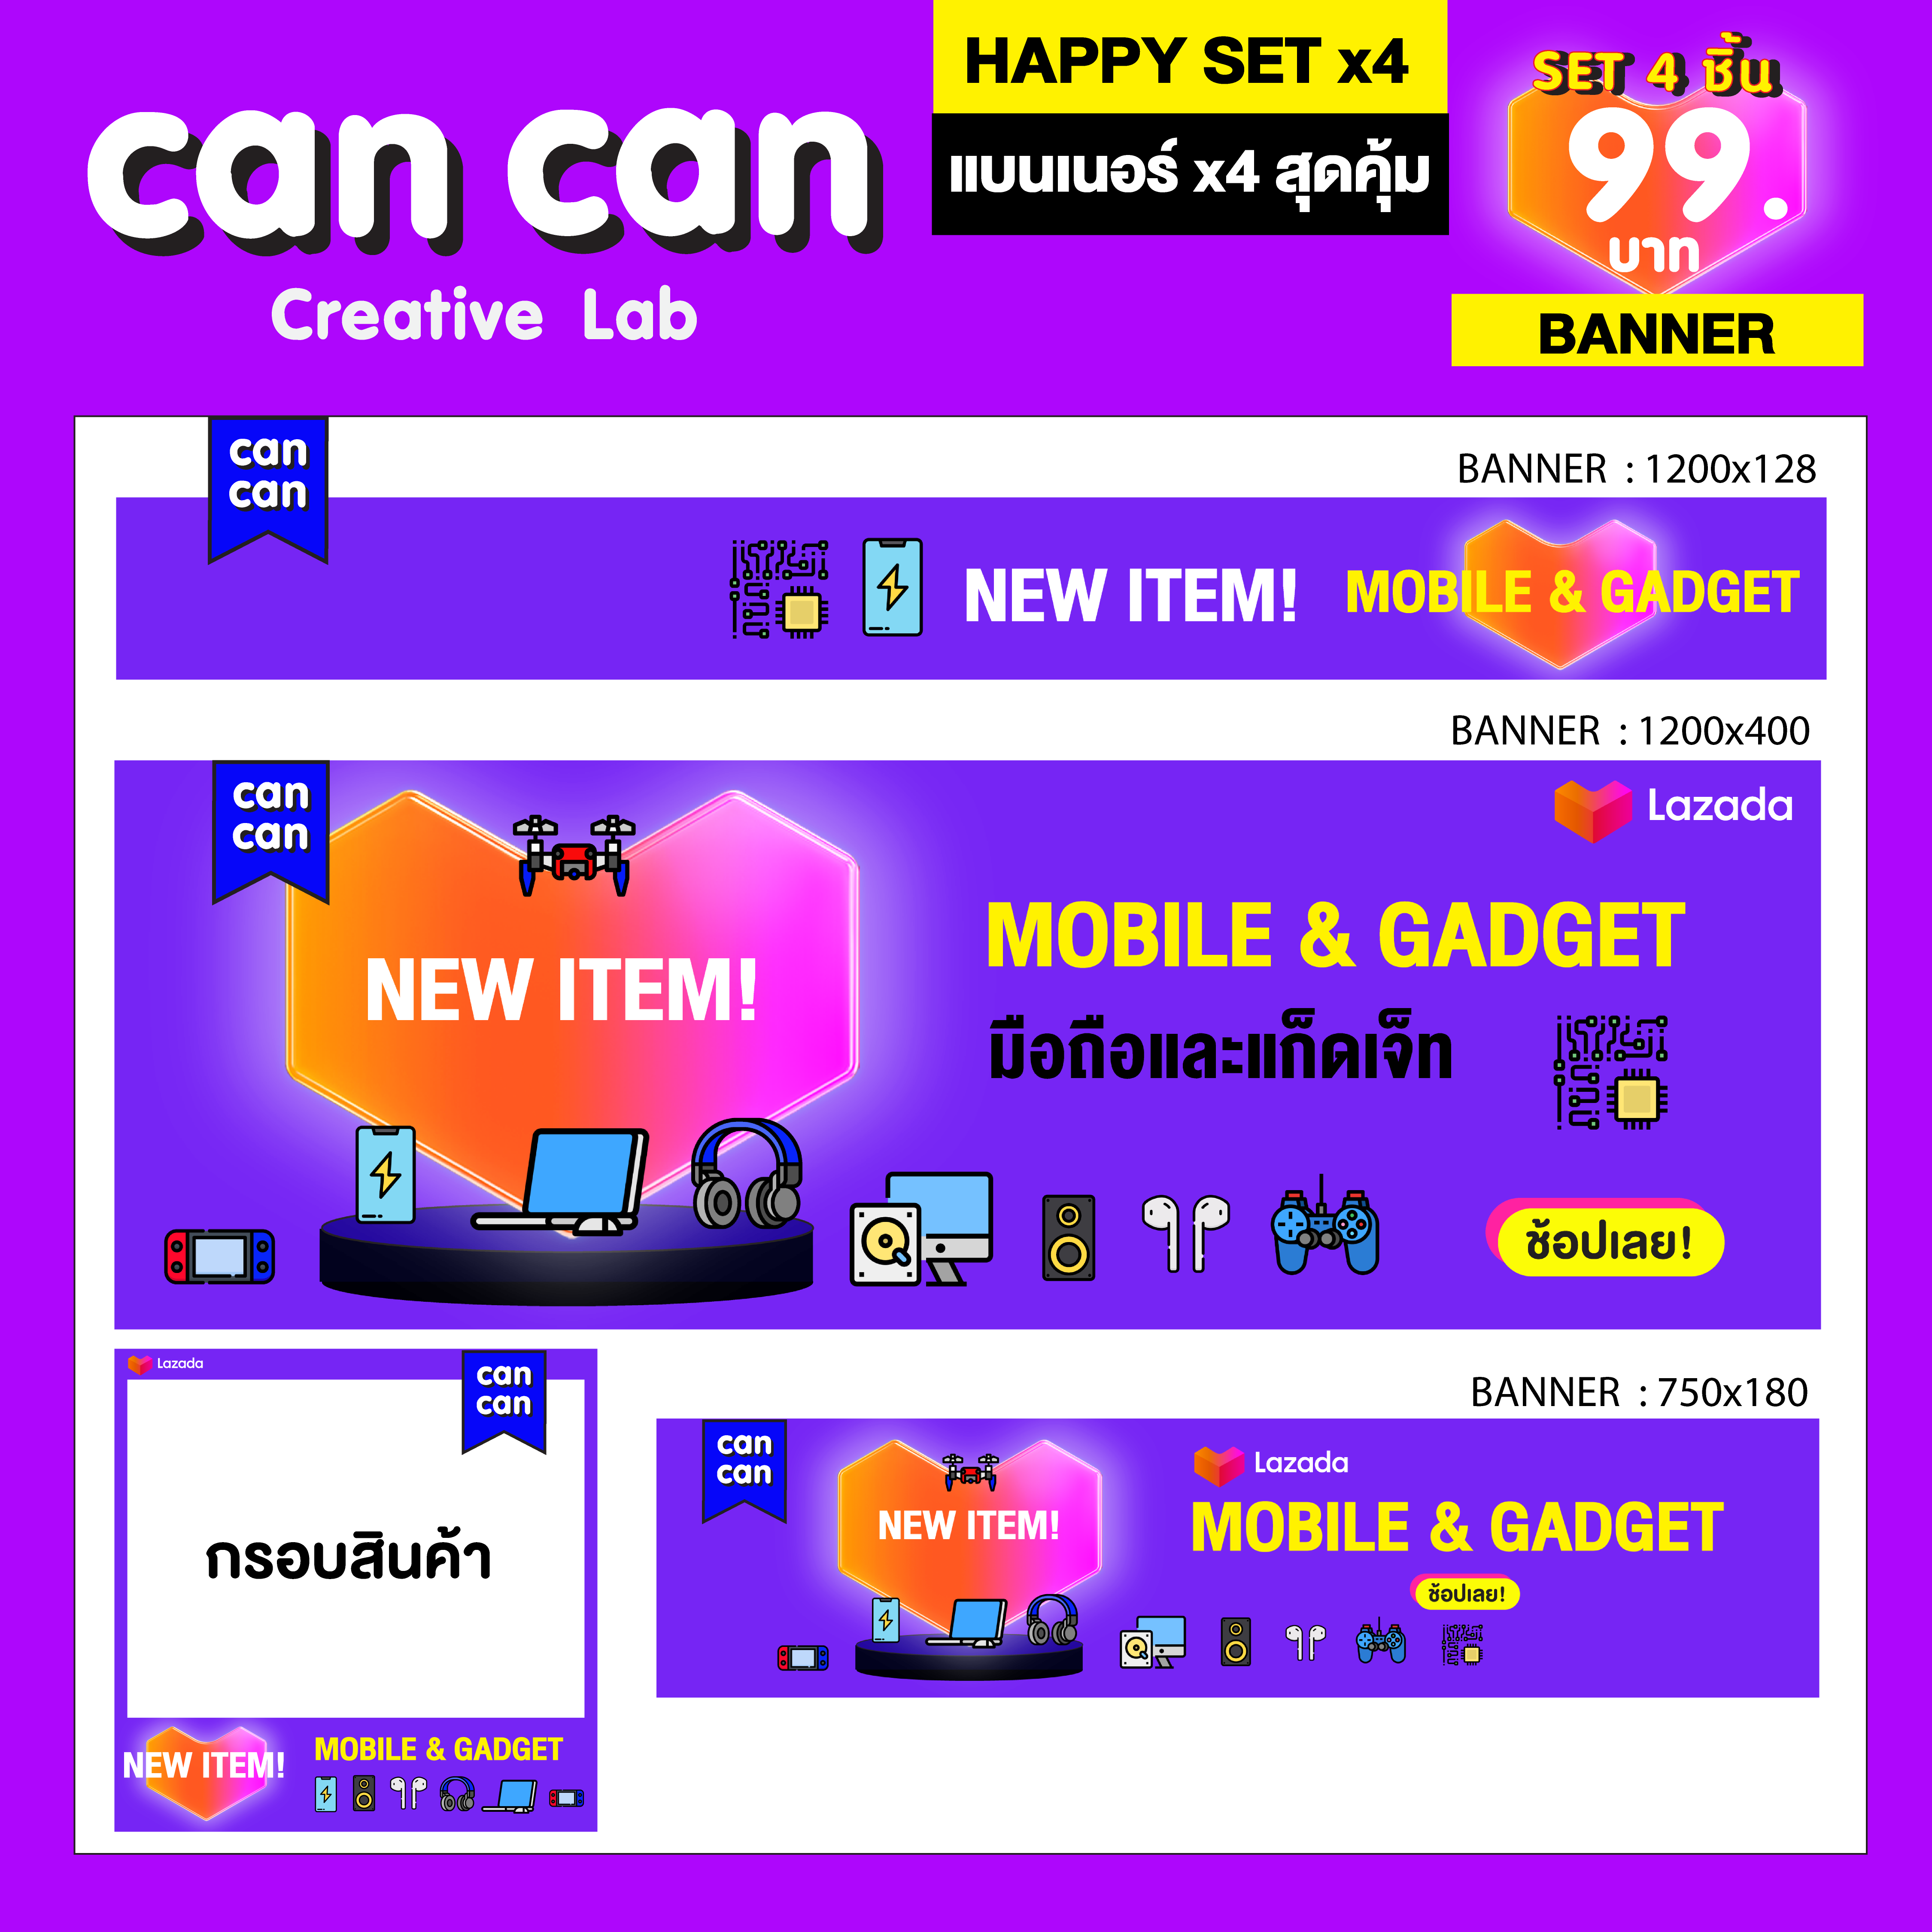 CanCan Creative Lab - Banner Setx4 - Lazada : Mobile&Gadget  มือถือและแก็ดเก็ท  ราคาพิเศษ  (จัดส่งทางอีเมลทันทีใน 24 ชม.))